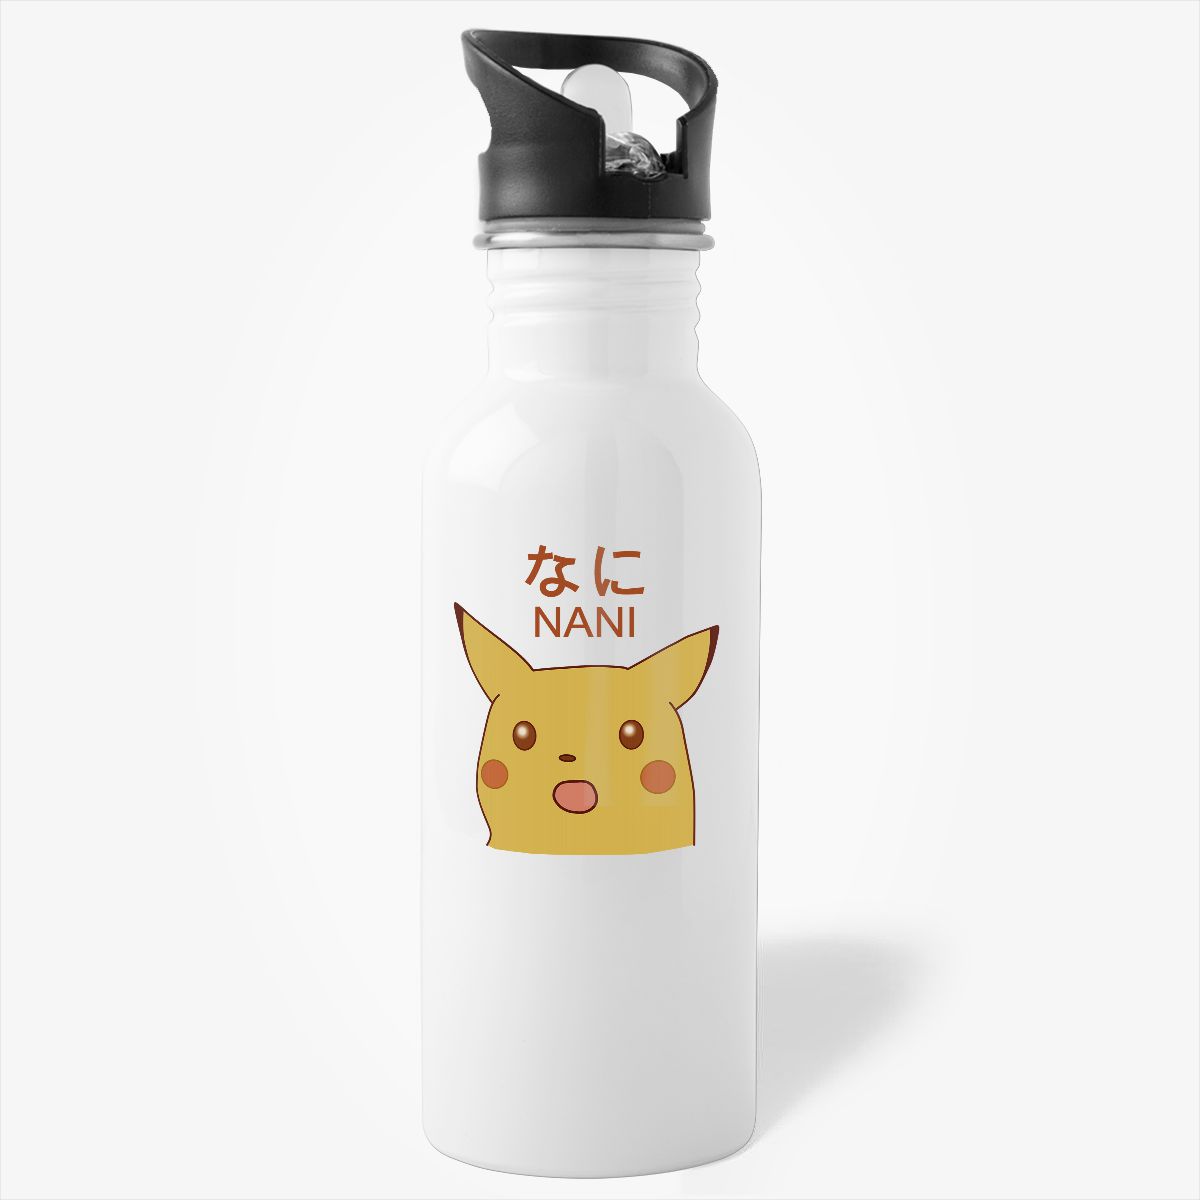 Pikachu water bottle, funny gift for Pikachu fan, customized water bottle,  Pokemon water bottle, comic water bottle